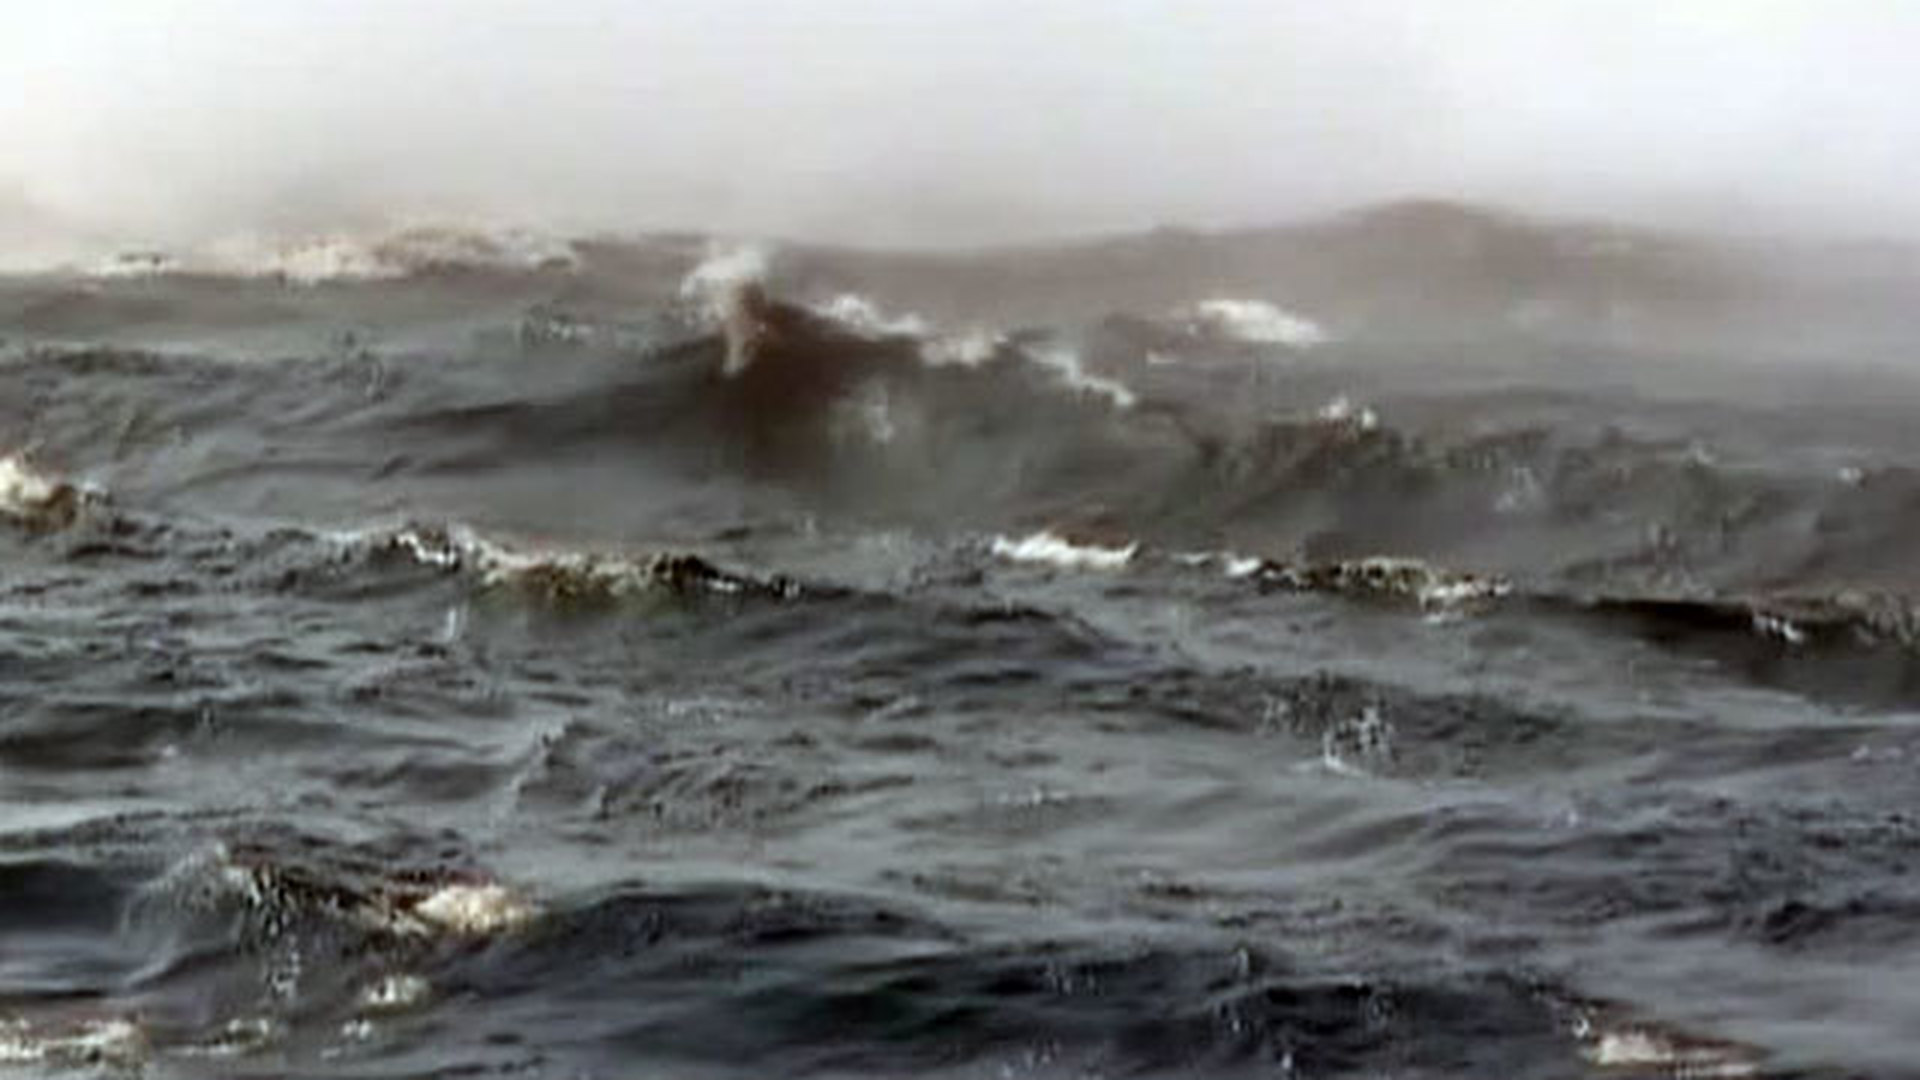 Надвигающихся штормов экспедицию решено перенести. Камчатка шторм. Ураганы на Камчатке 9 апреля. Непогода на Камчатке. Шторм в Охотском море фото.